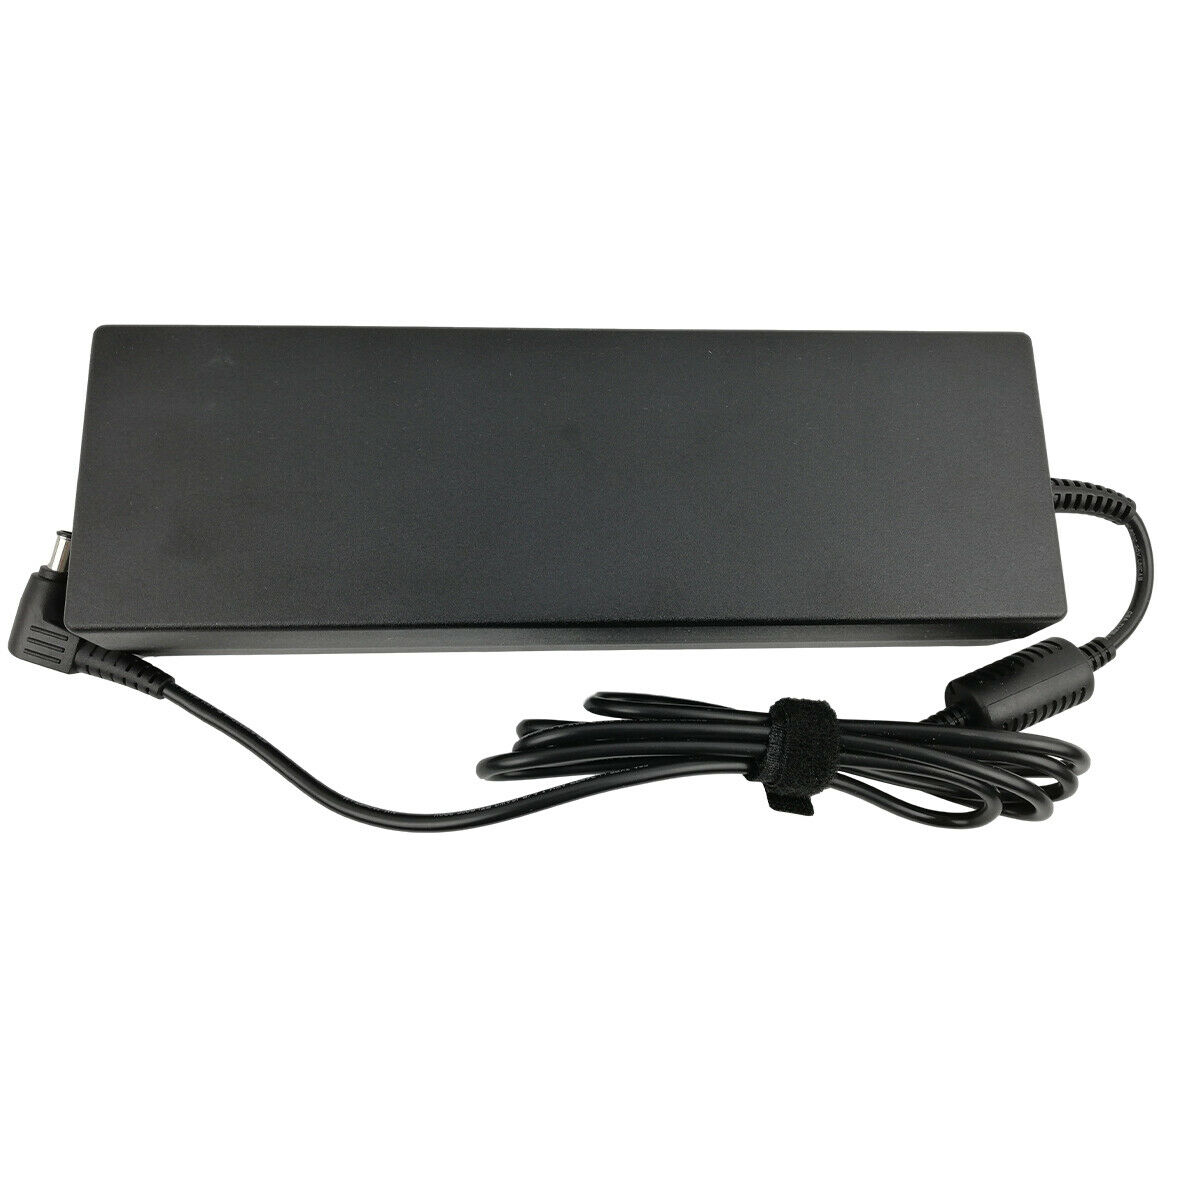 ACDP-200D02-KD-55X900E-NEW Original SONY KD-55X900E TV Power Adapter Cable Cord Bo - Click Image to Close